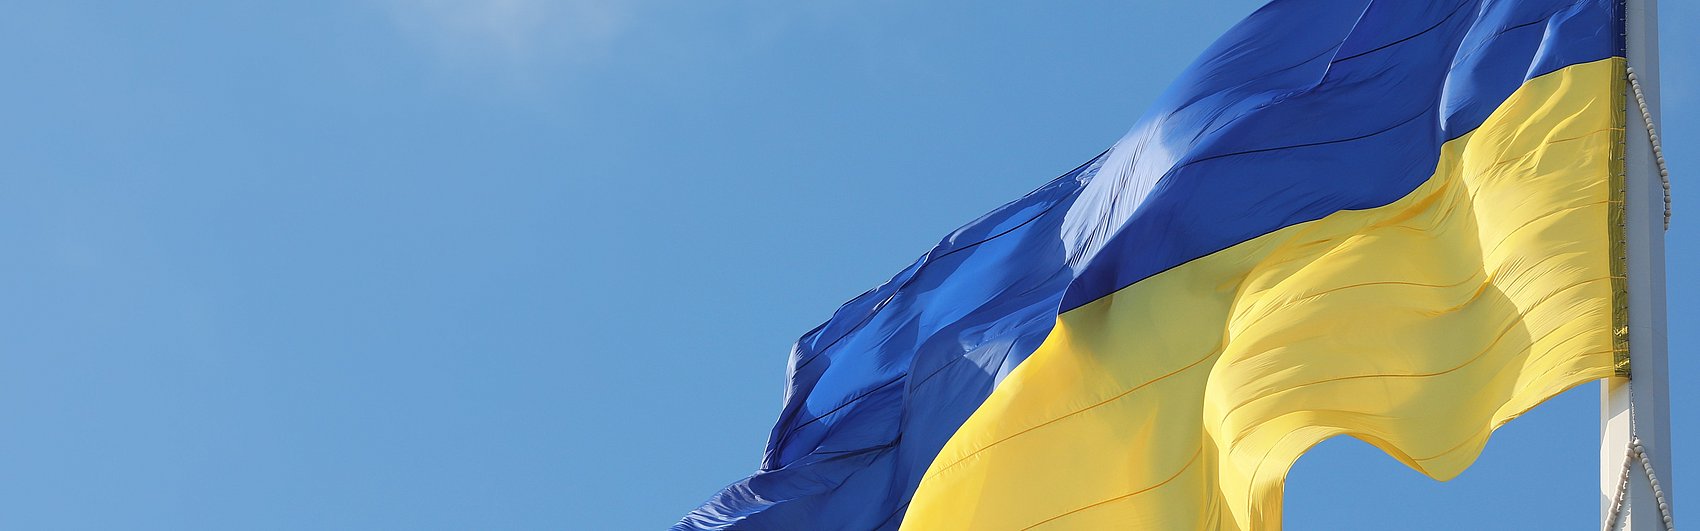 csm_Ukraine_flag_07e21eb7bd.jpeg